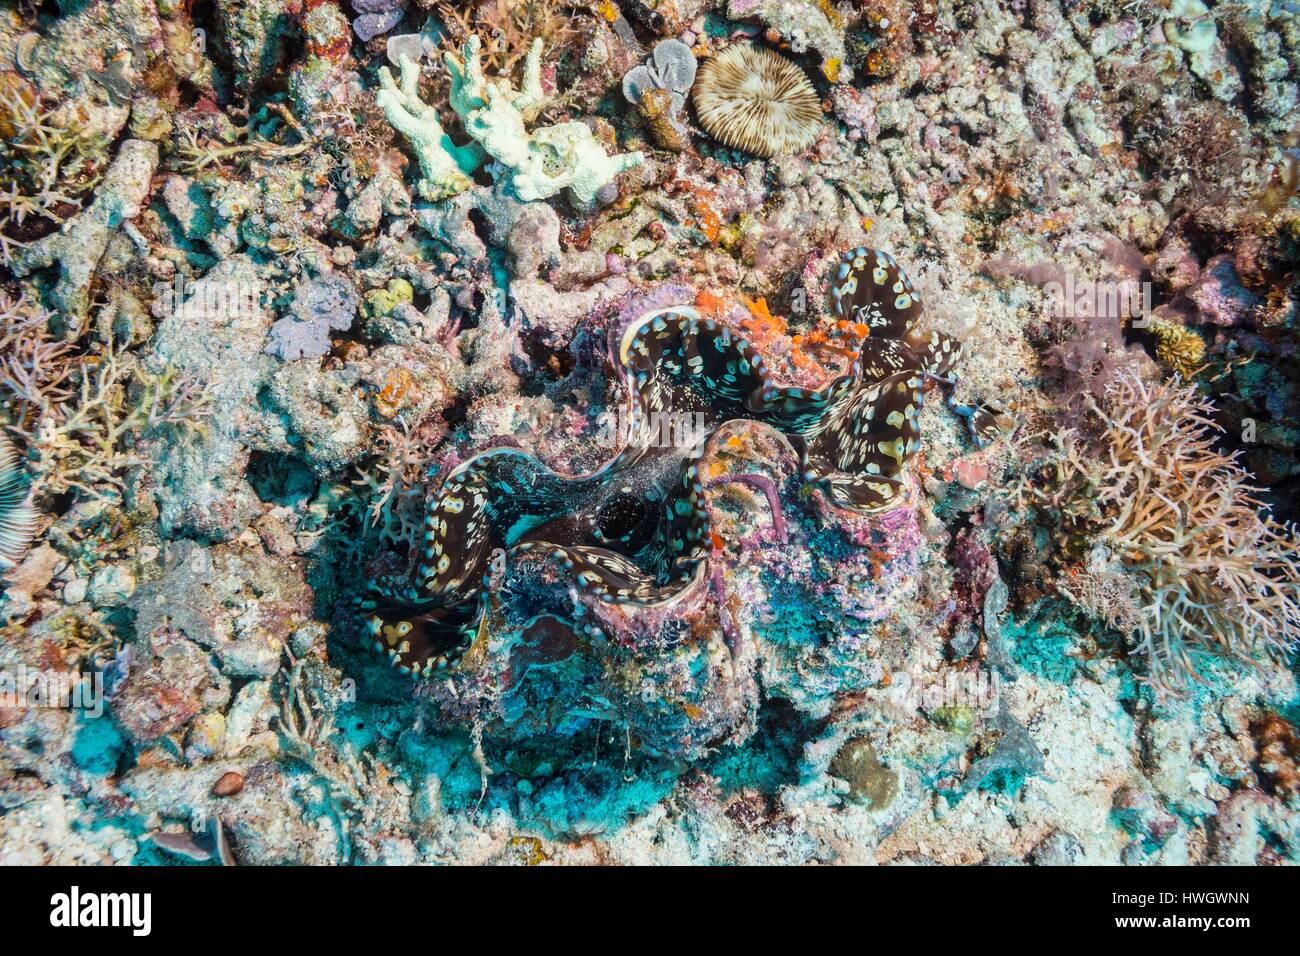 Philippines, Mindoro, Apo Reef Natural Park, giant clam (Tridacna gigas) Stock Photo